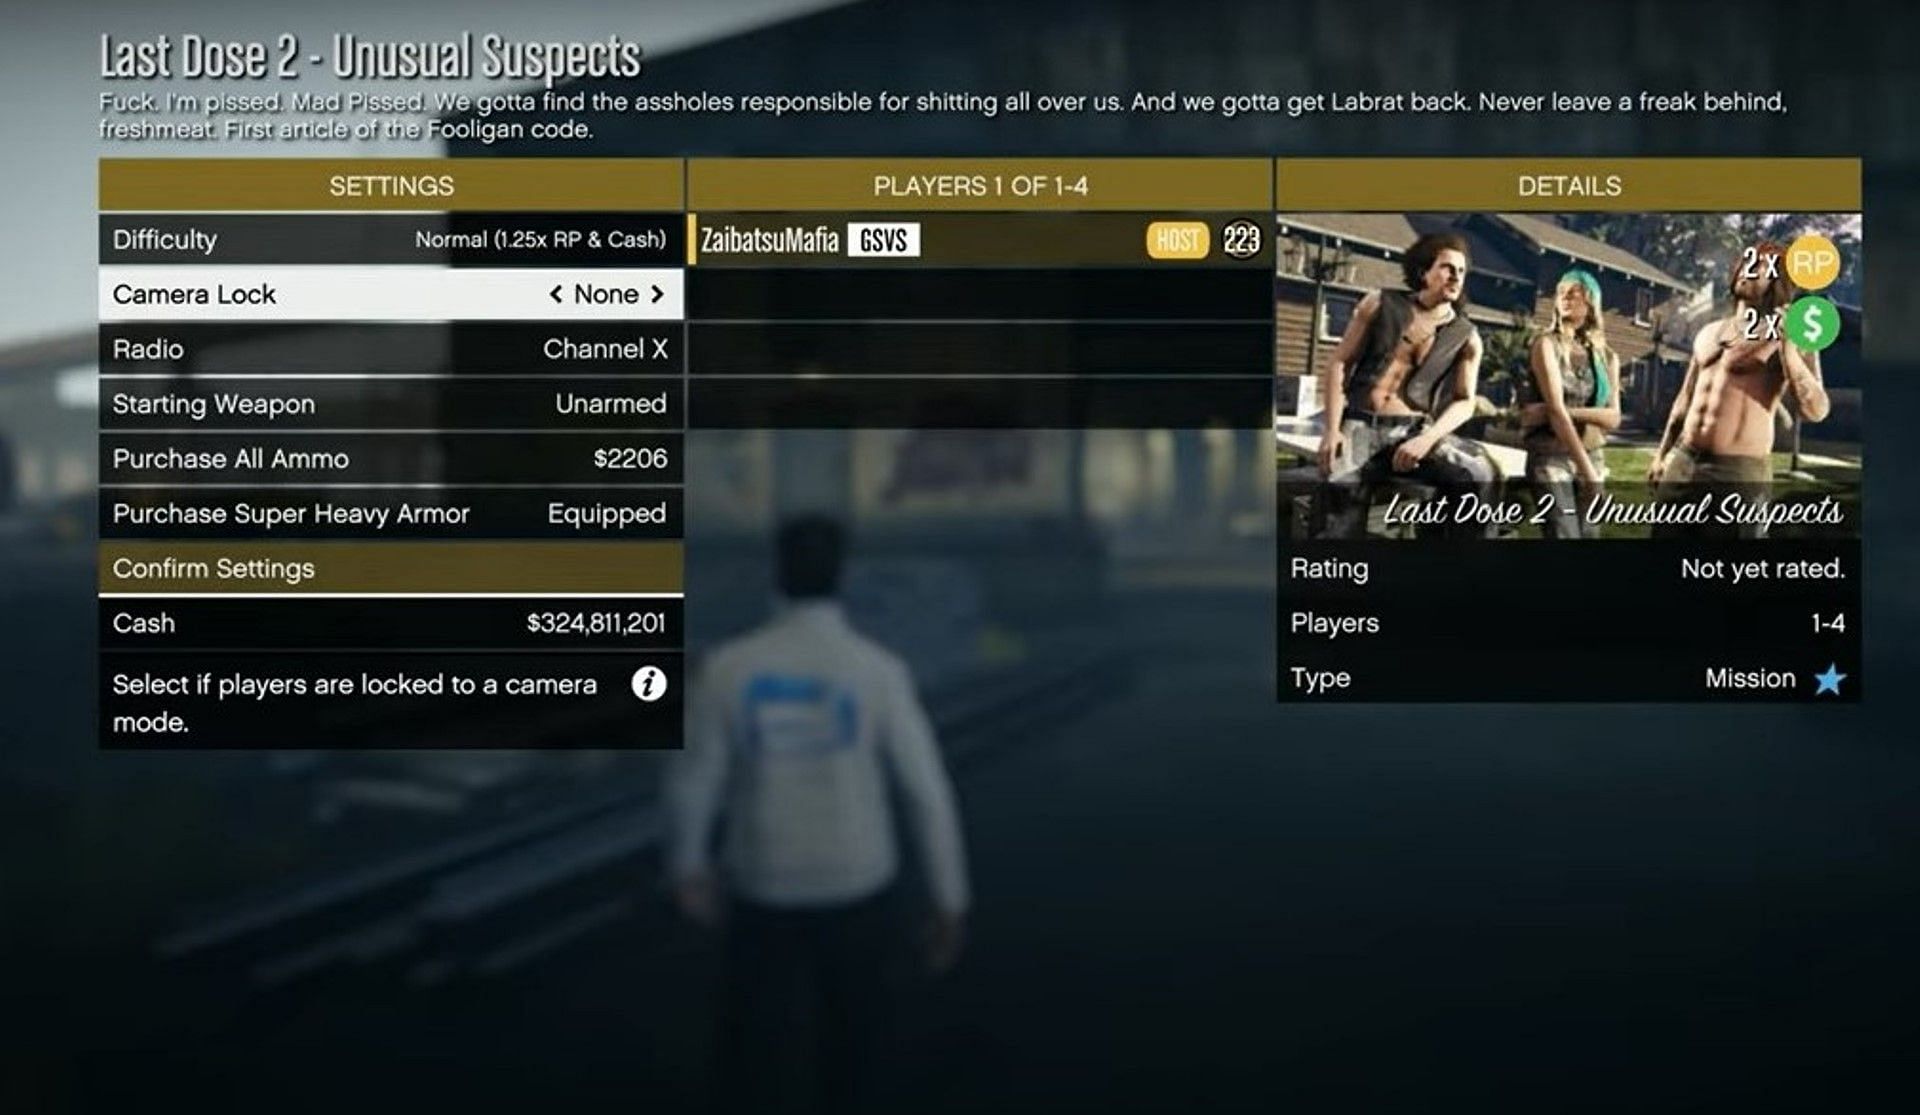 Unusual Suspects Mission loading screen in GTA Online (Image via GTA Series Videos/YouTube)